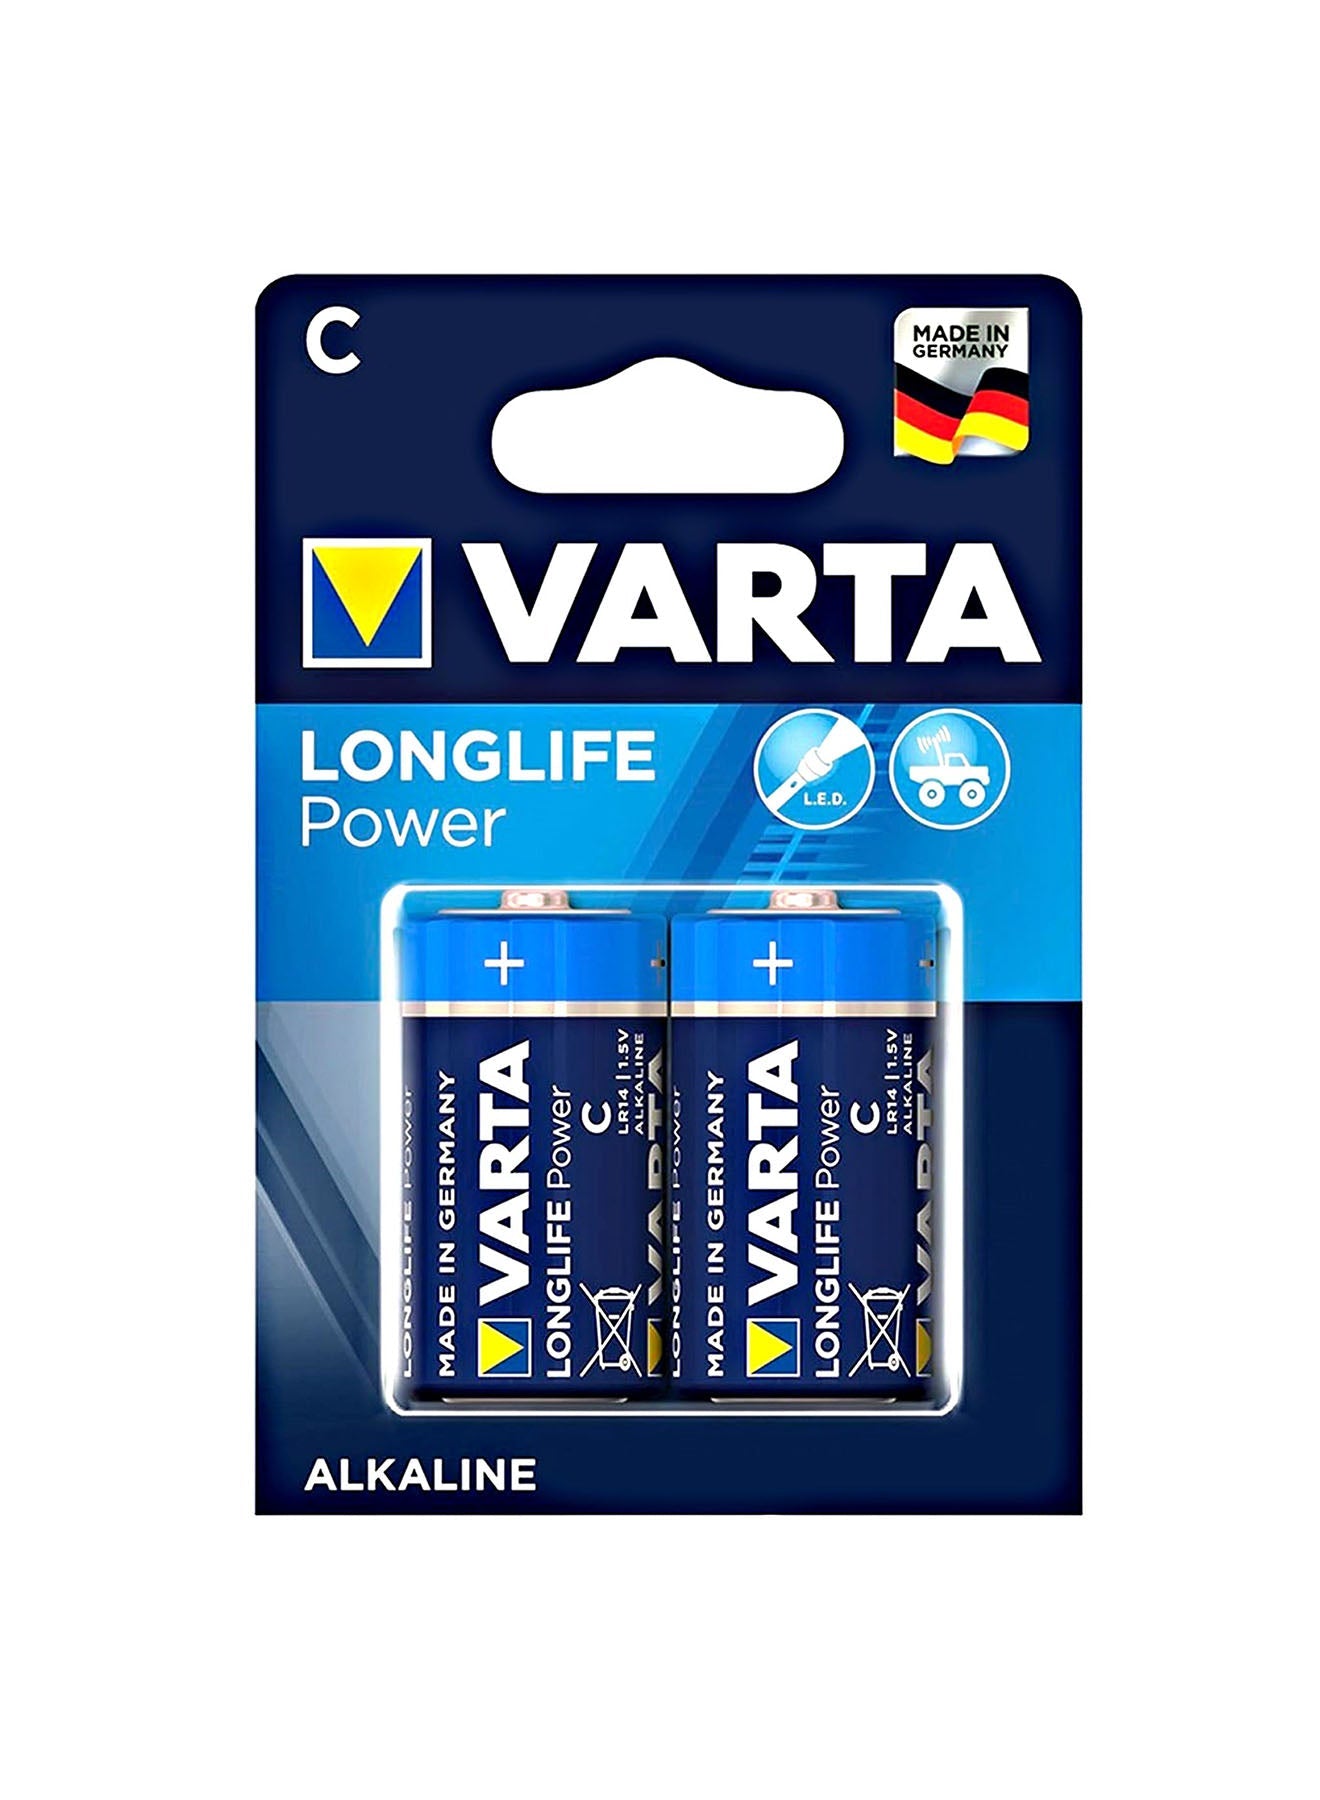 Varta Long life Power C Batteries 2 Units Value Pack of 4 